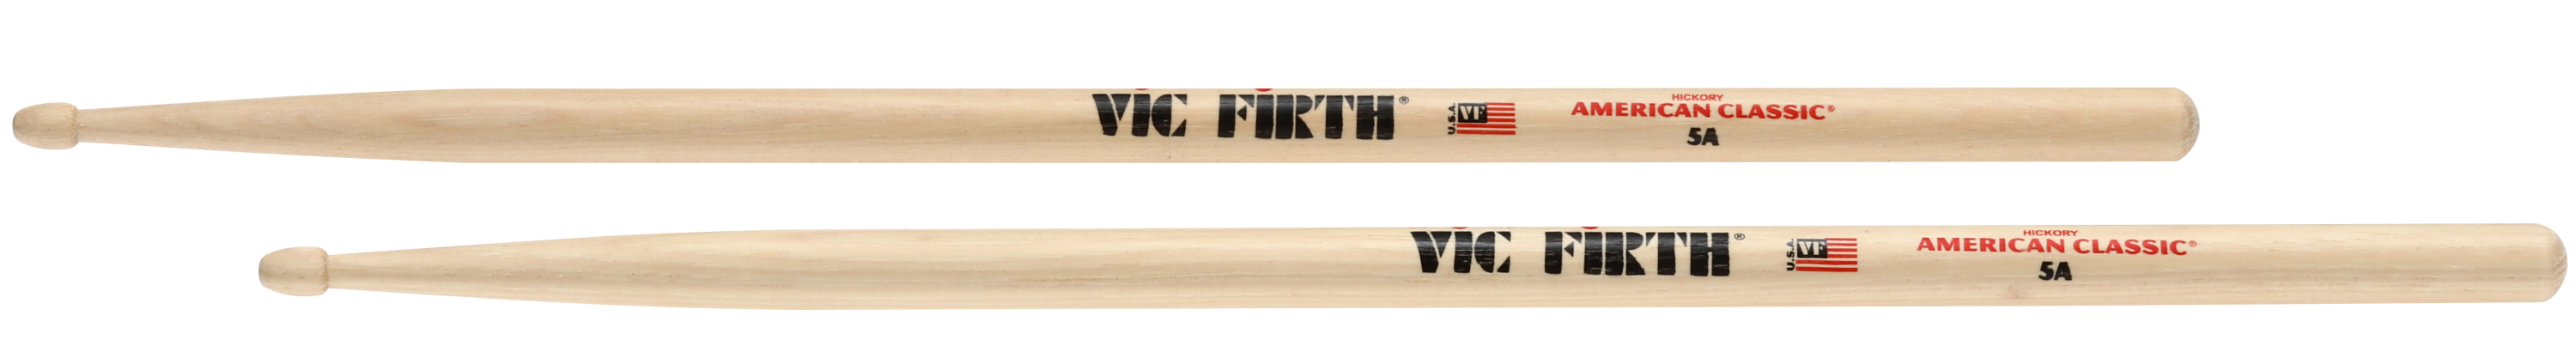 Bundled Item: Vic Firth American Classic Drumsticks - 5A - Wood Tip